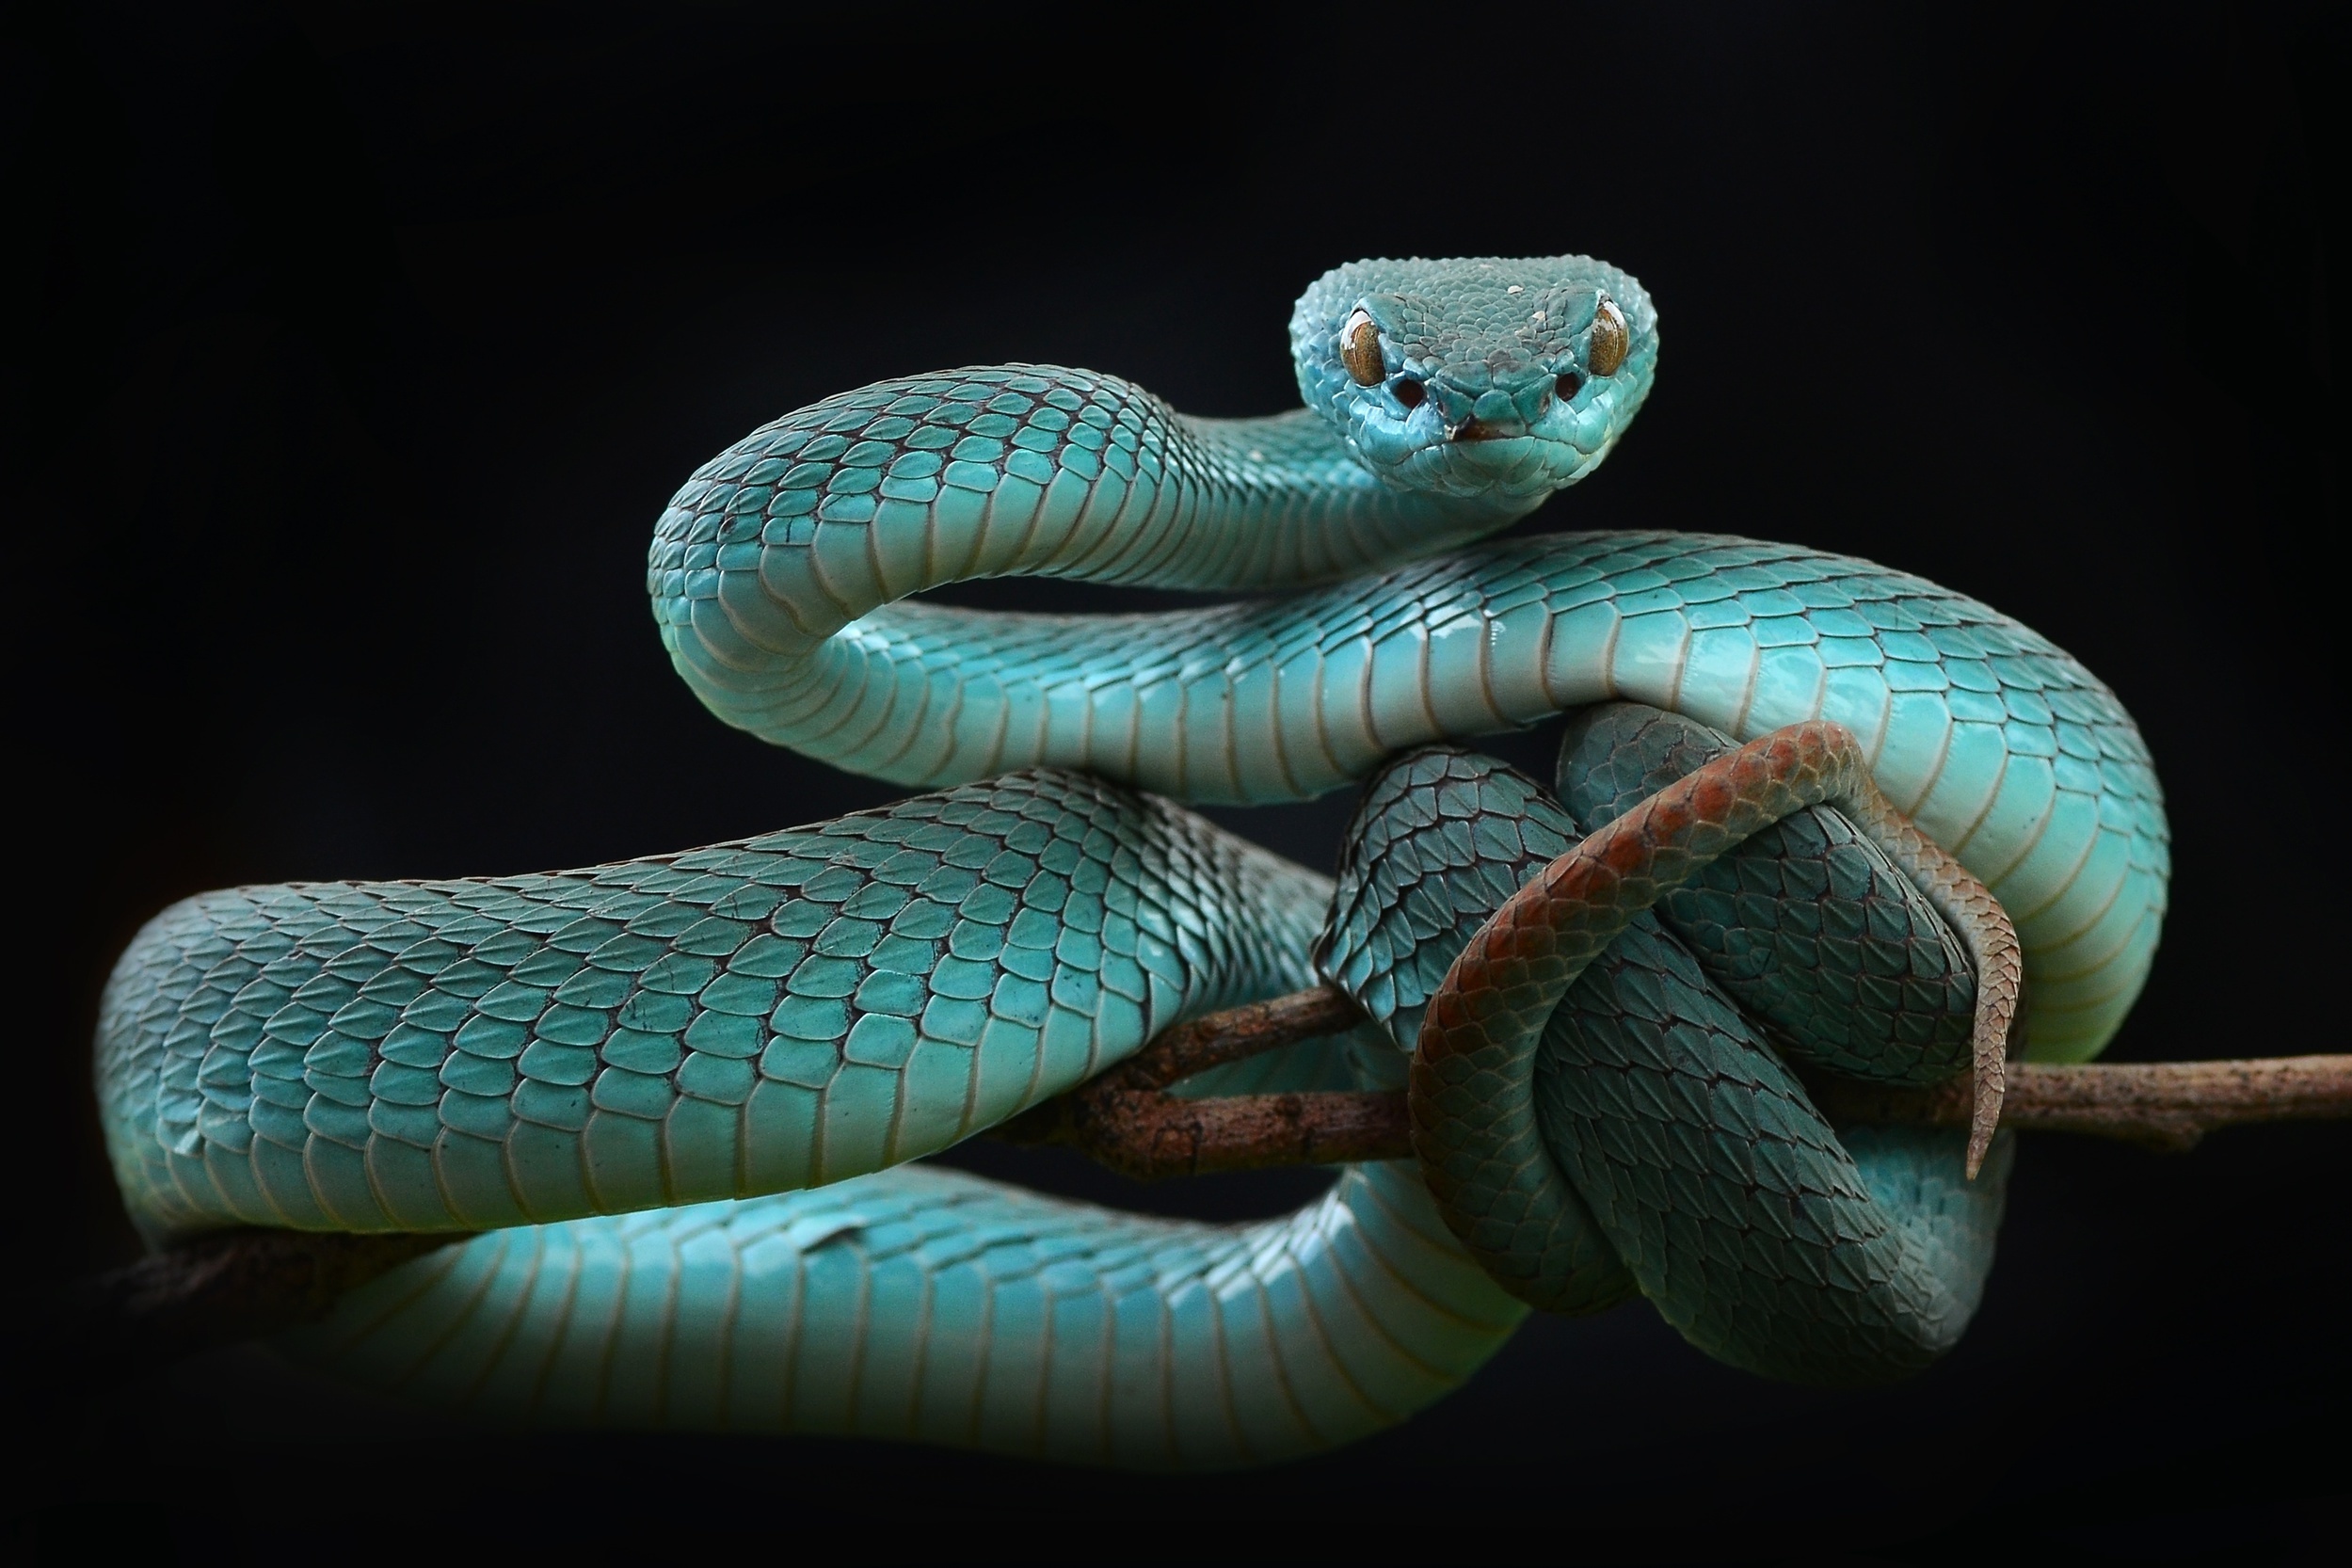 Image: Reptile, snake, viper, blue keffiyeh, branch, background